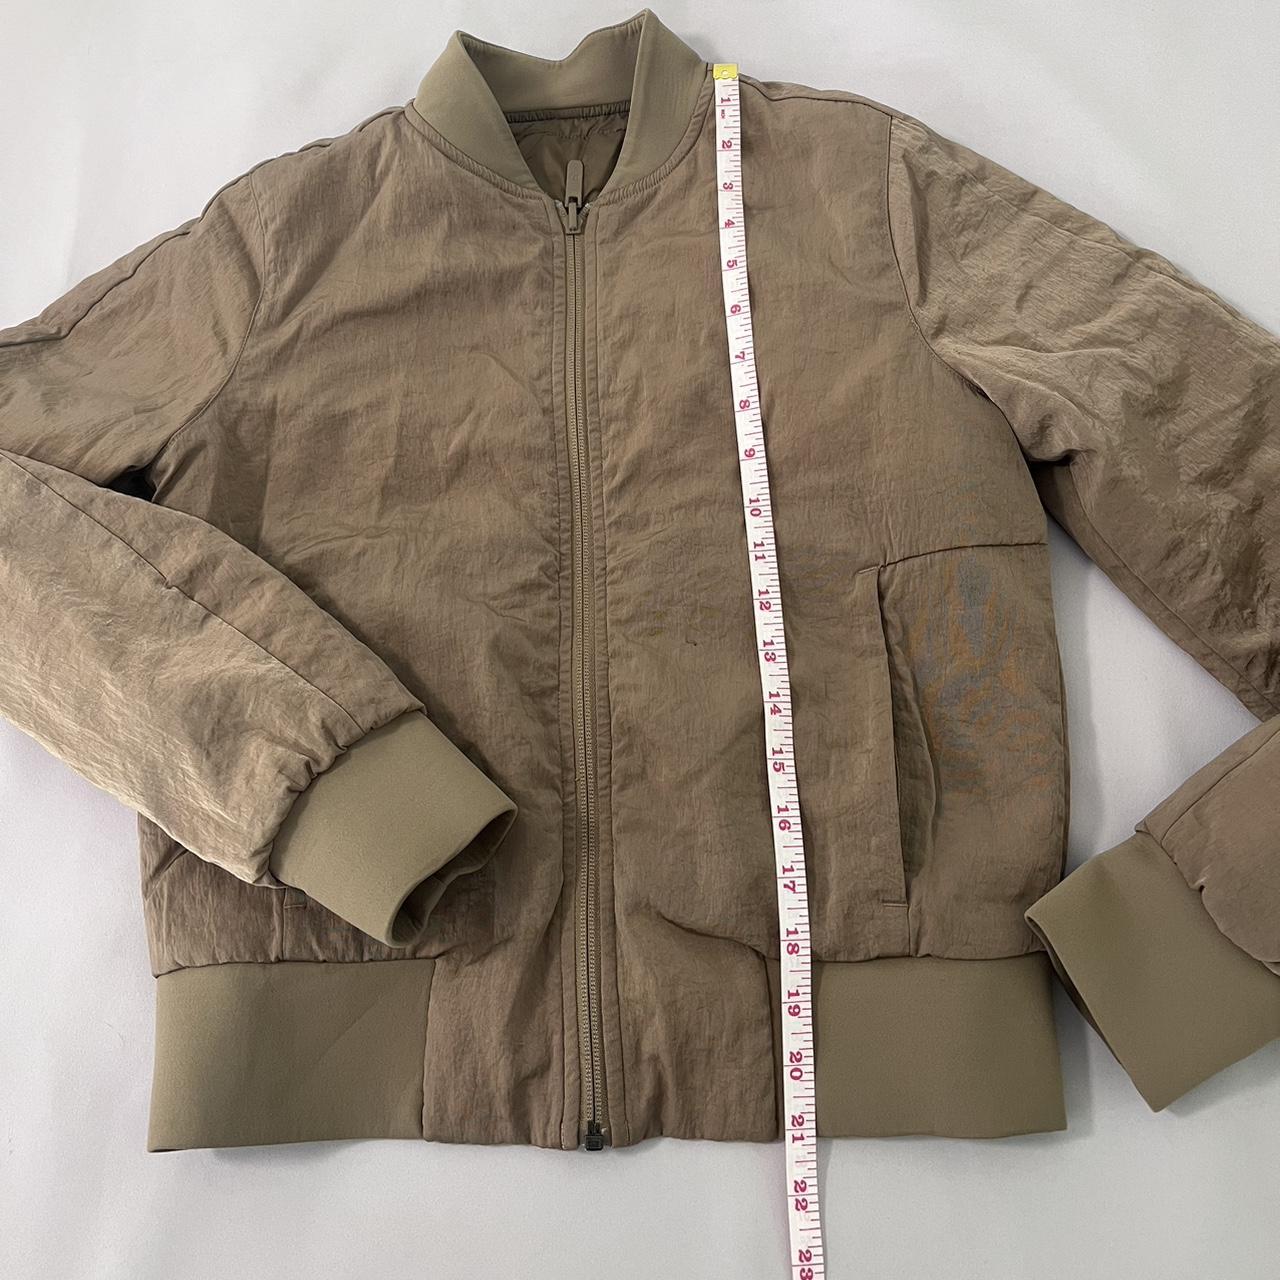 NWT Lululemon Women's Non-Stop Bomber Jacket - Artifact Brown Size 4 Retail  $168